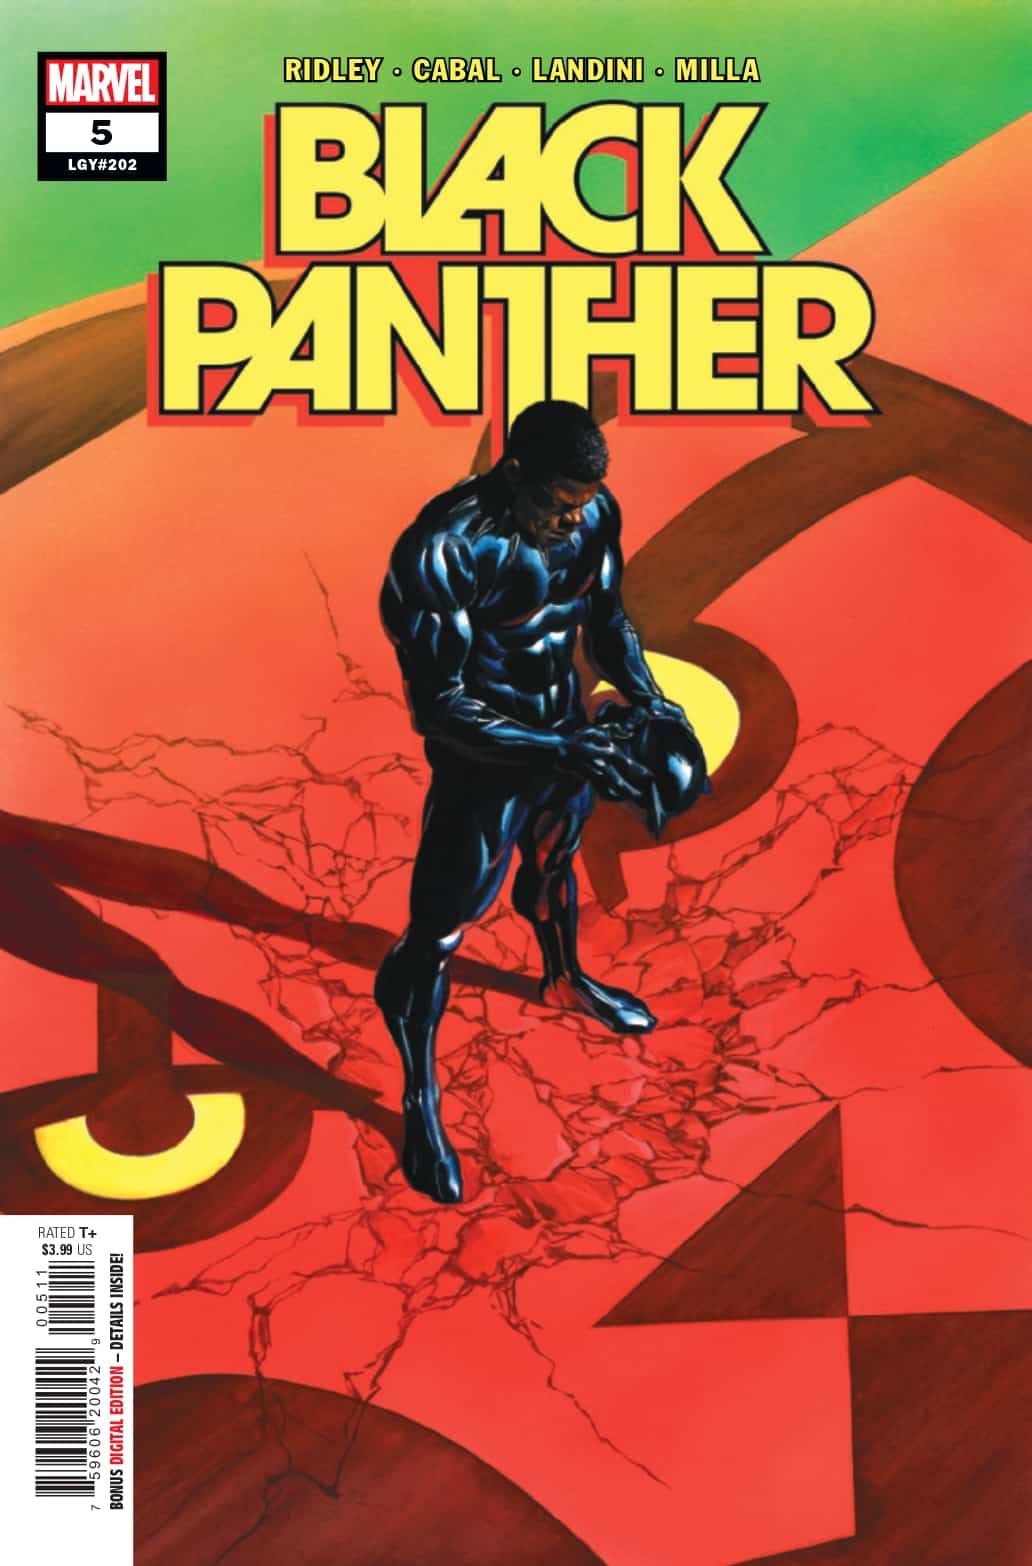 SNEAK PEEK: Preview of Marvel's BLACK PANTHER #5 (On Sale 4/13!) - Comic Watch